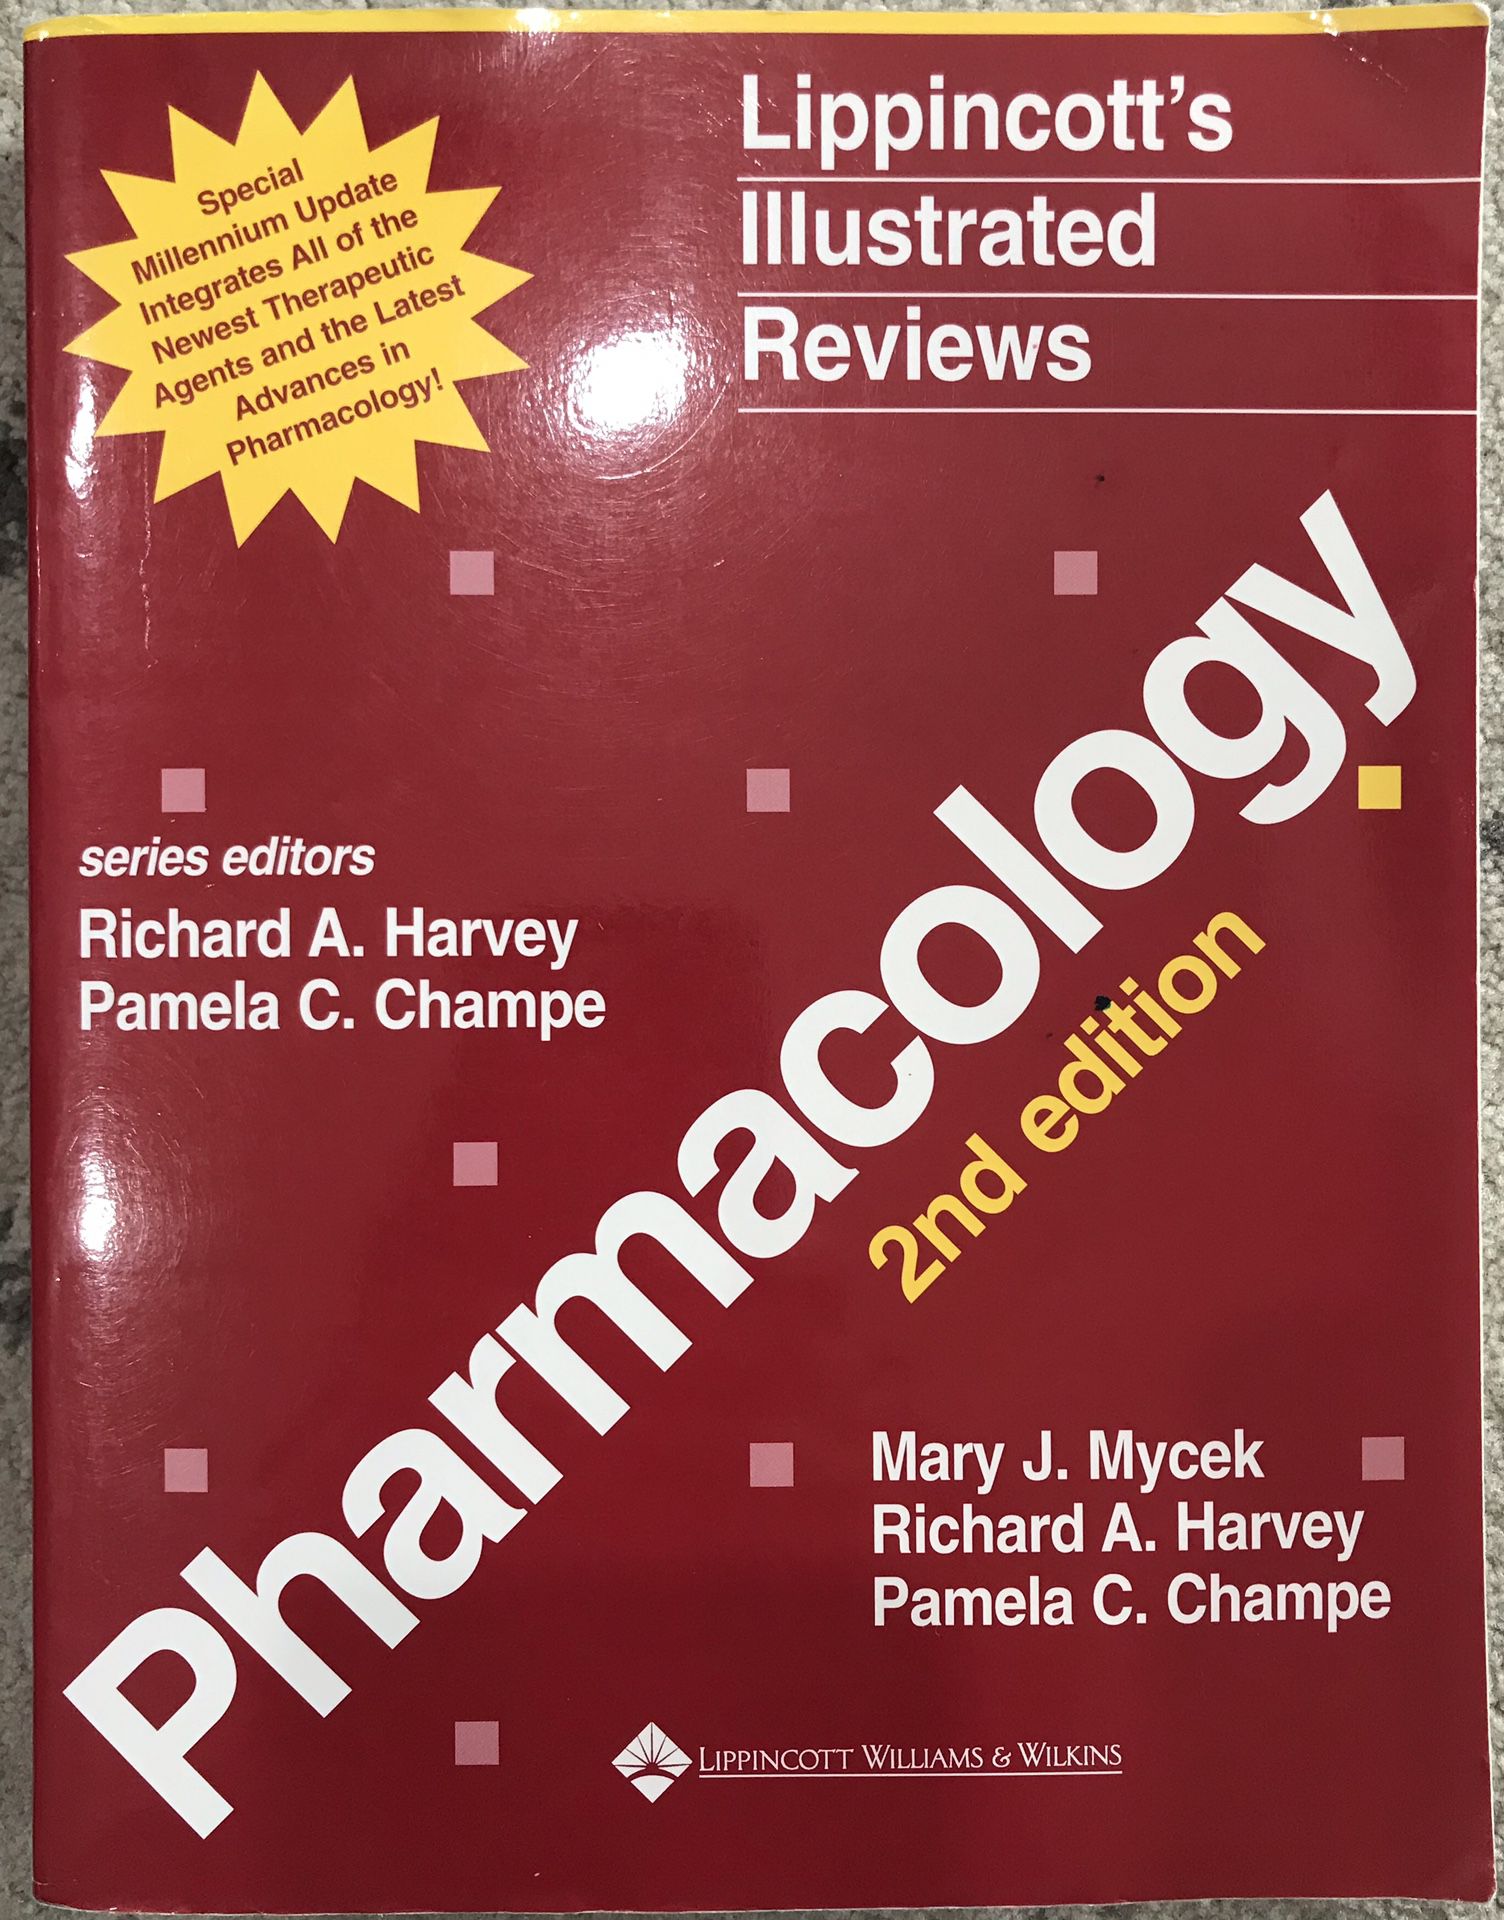 Lippincott’s Phamacology textbook